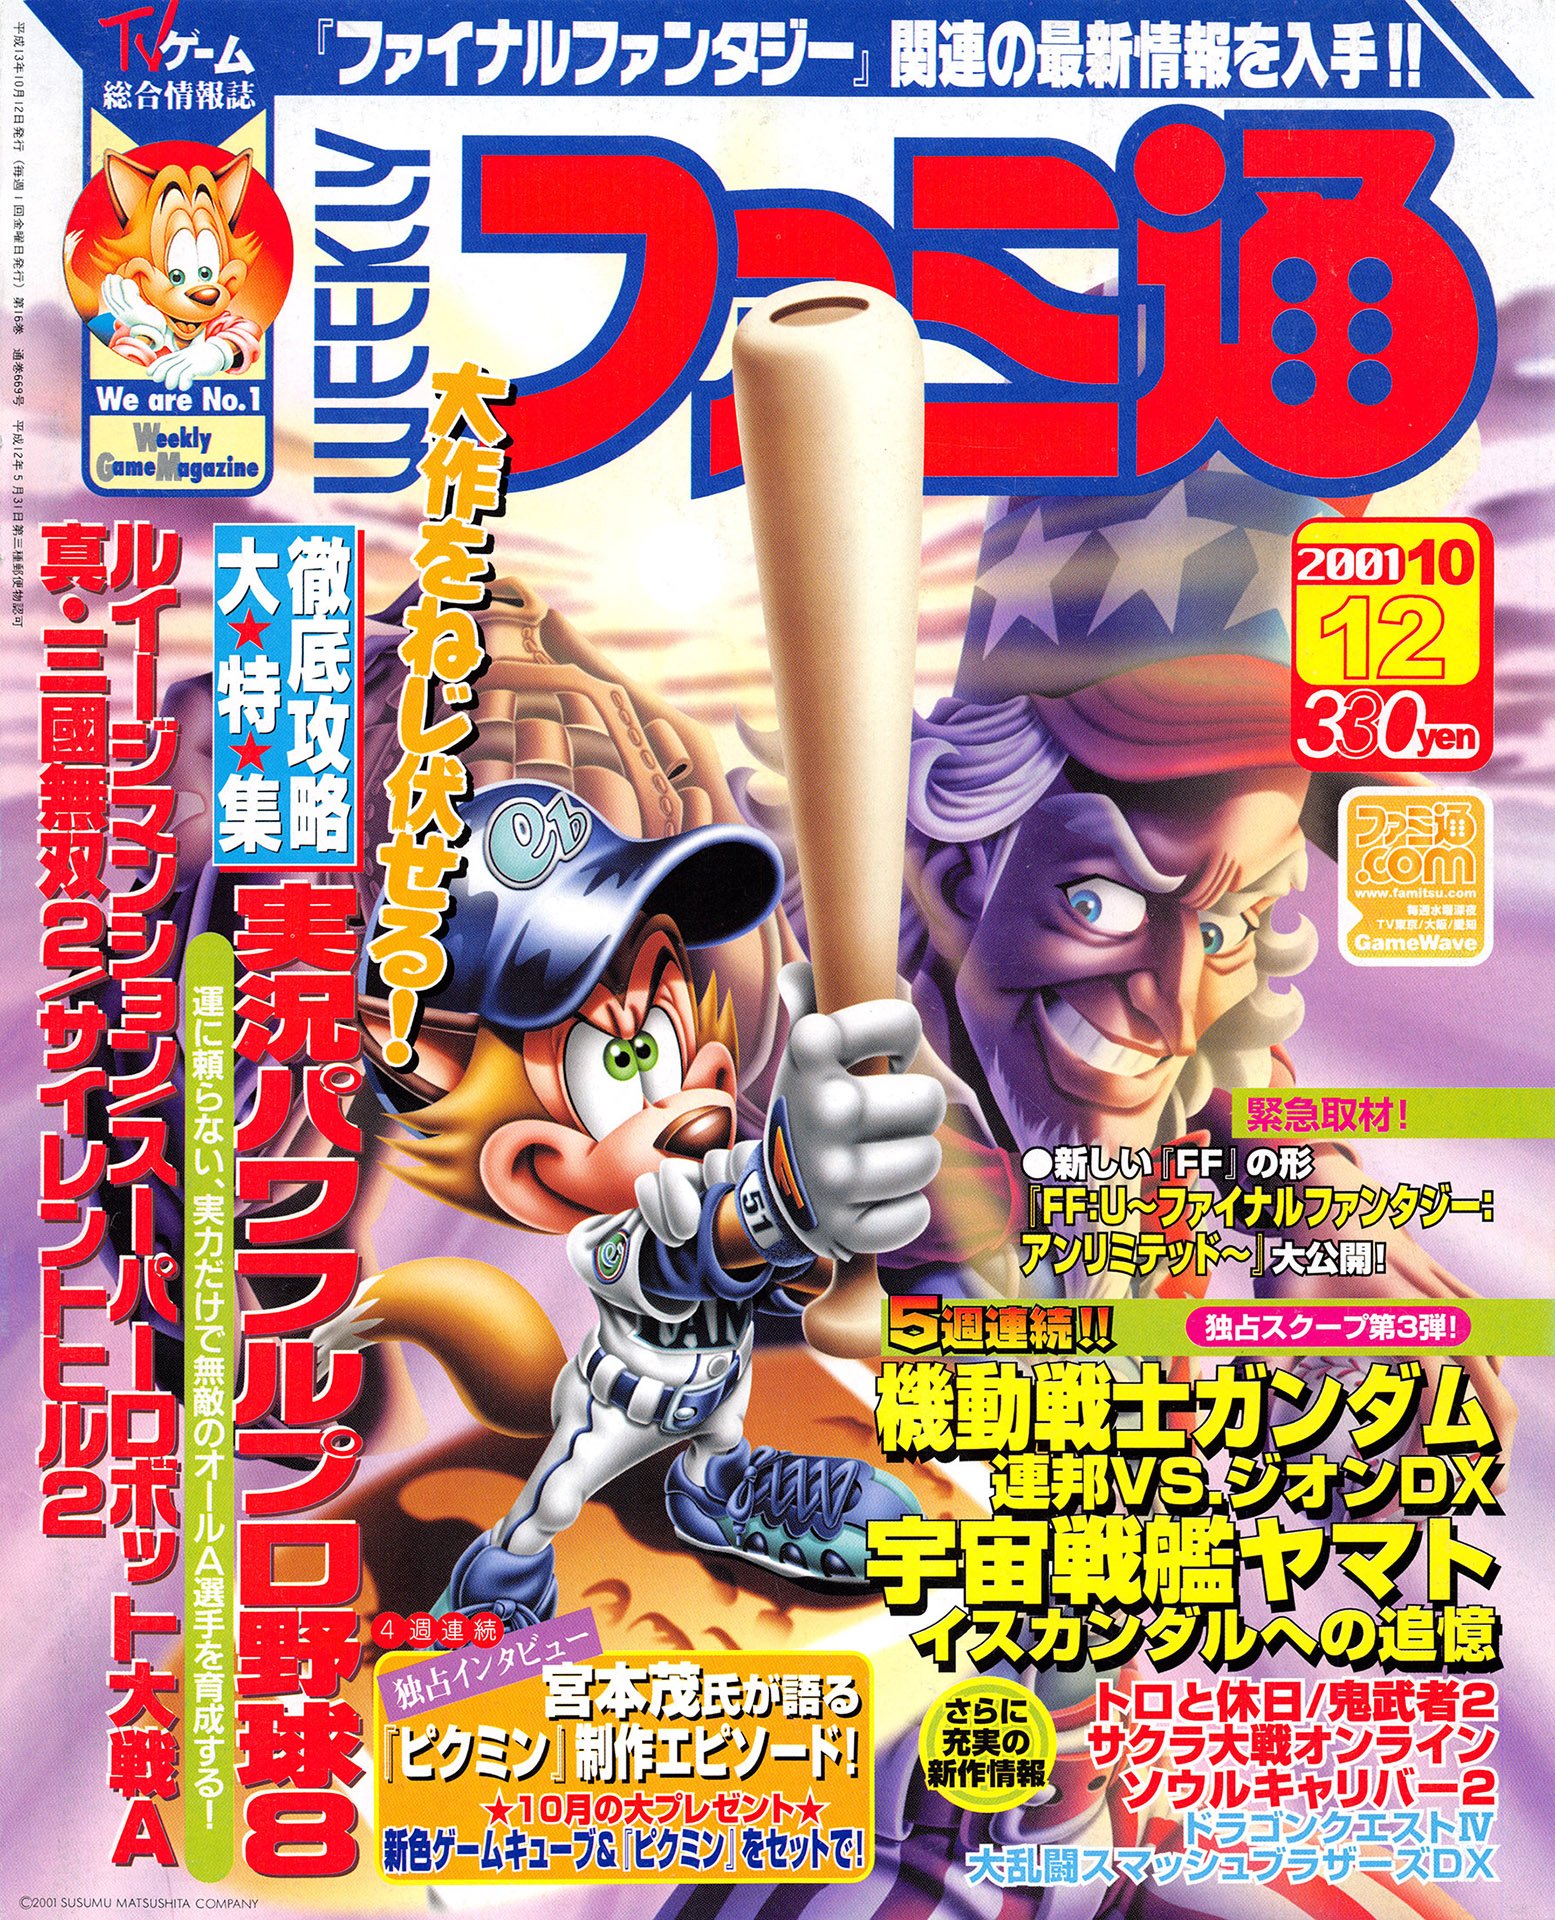 Famitsu Issue 0669 (October 12, 2001)